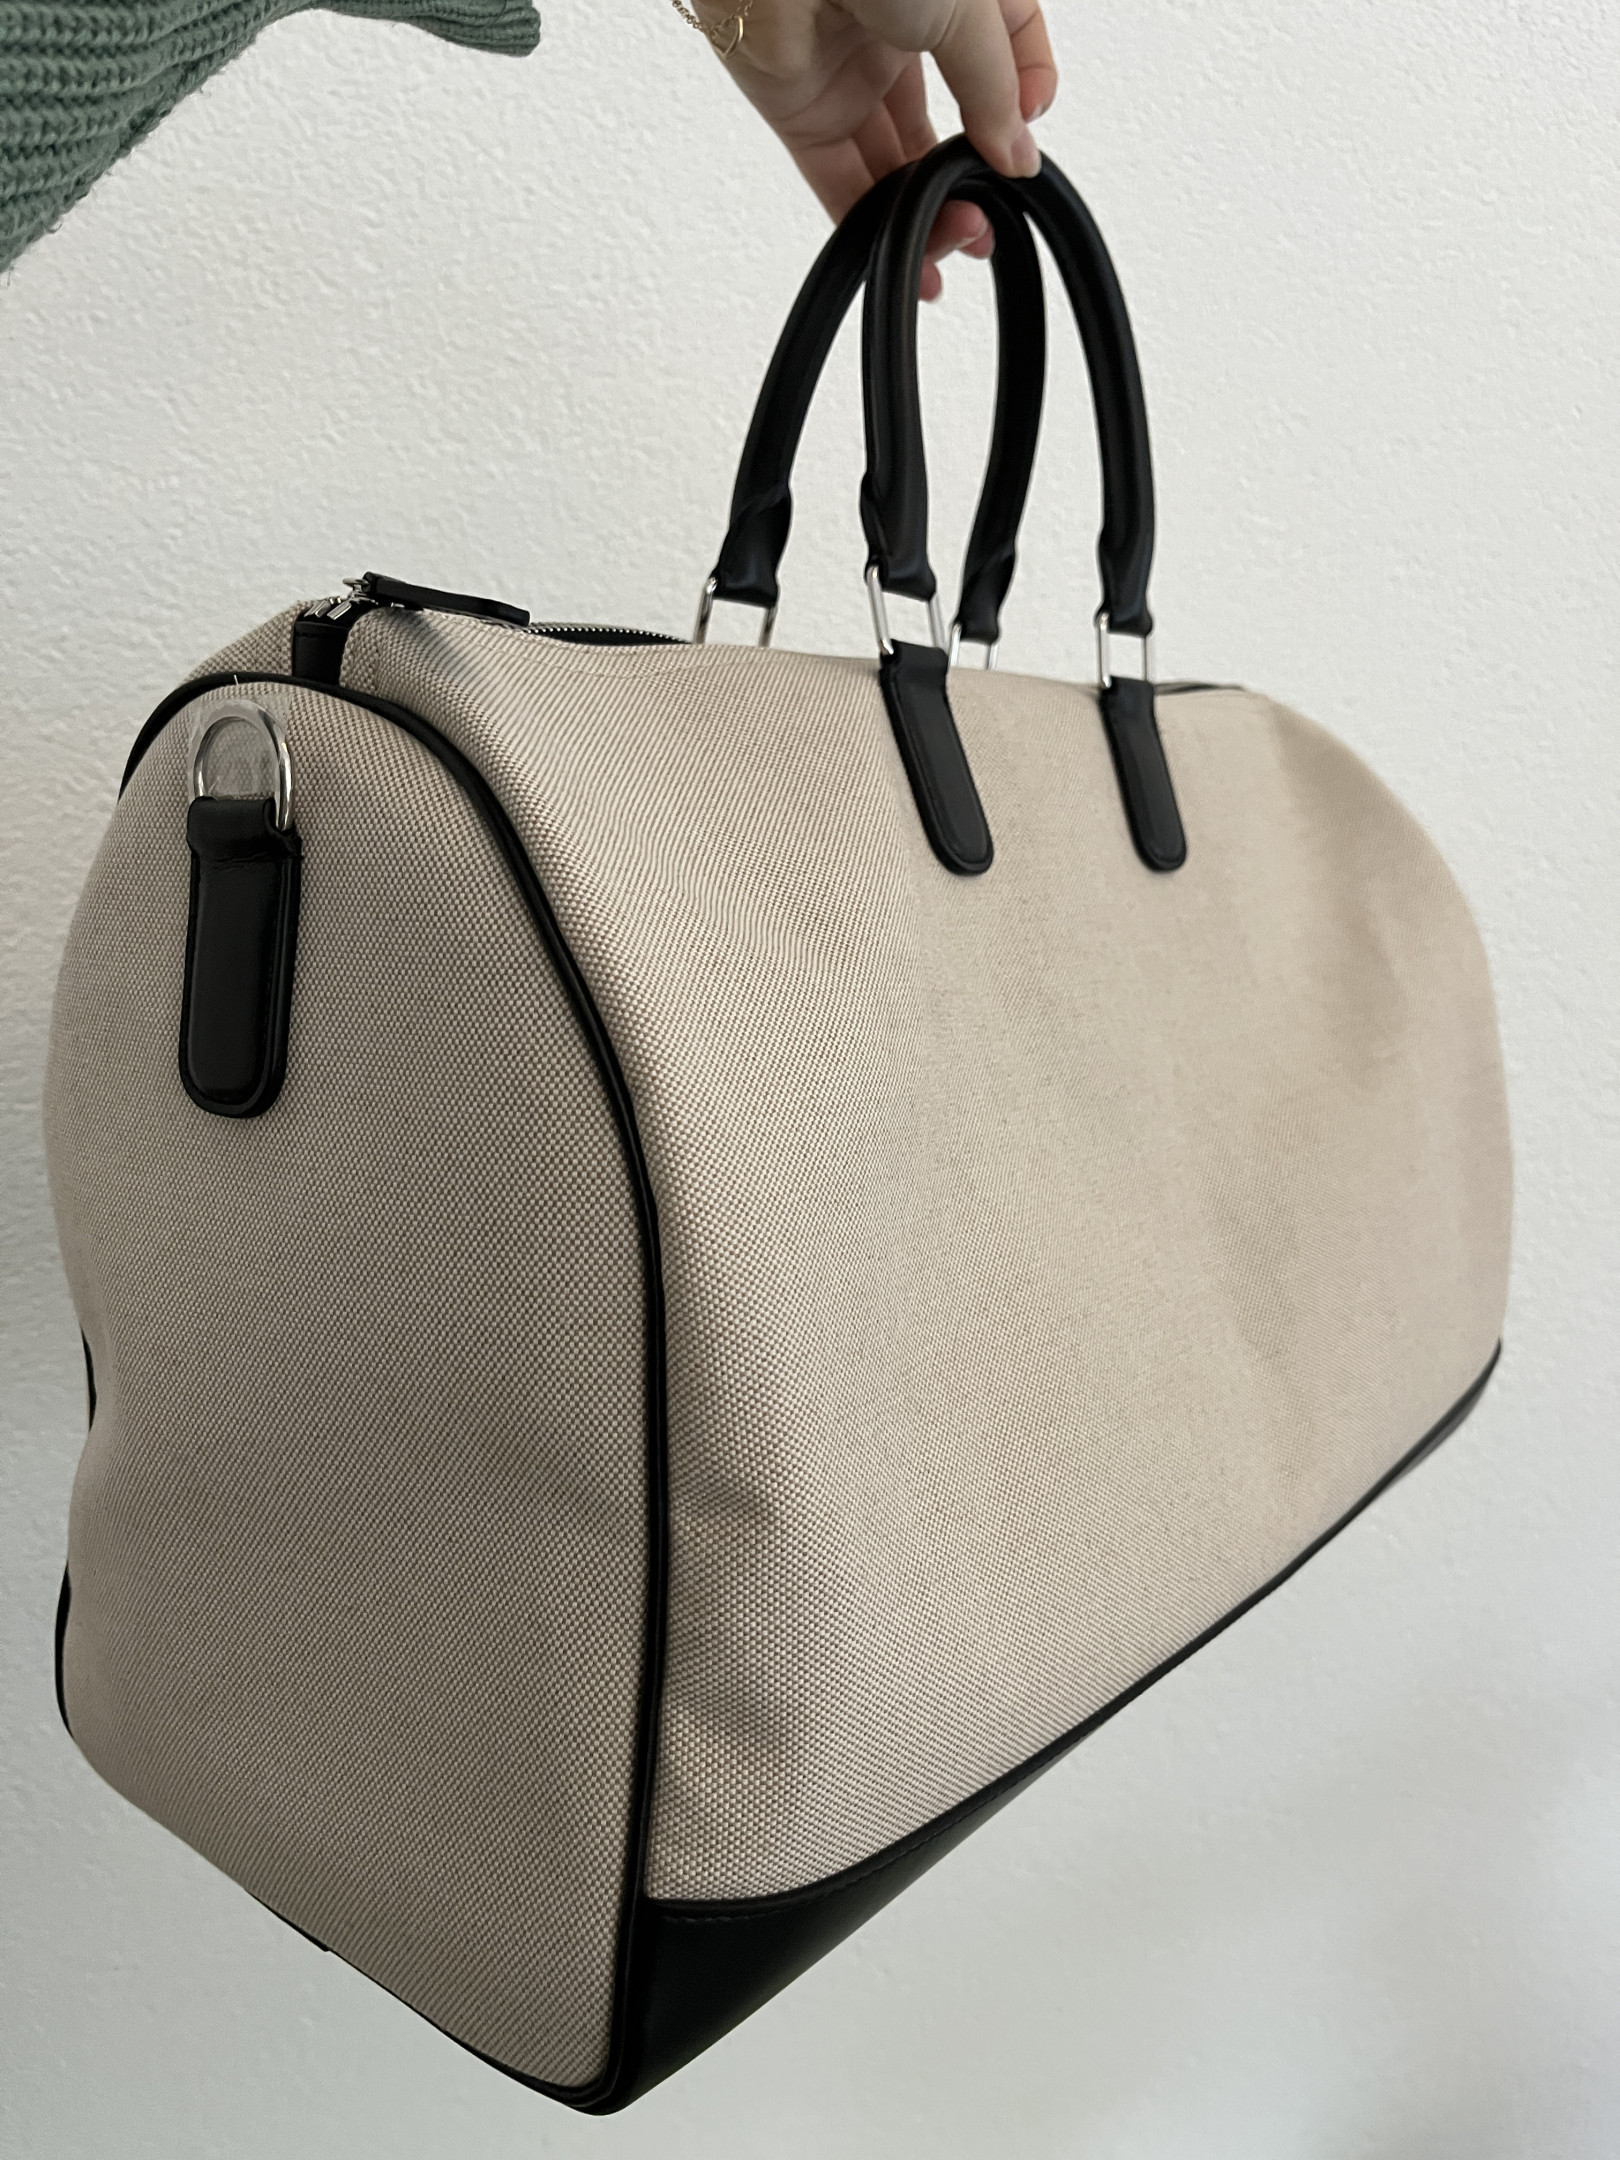 Fabric travel bag, checkered fabric interior